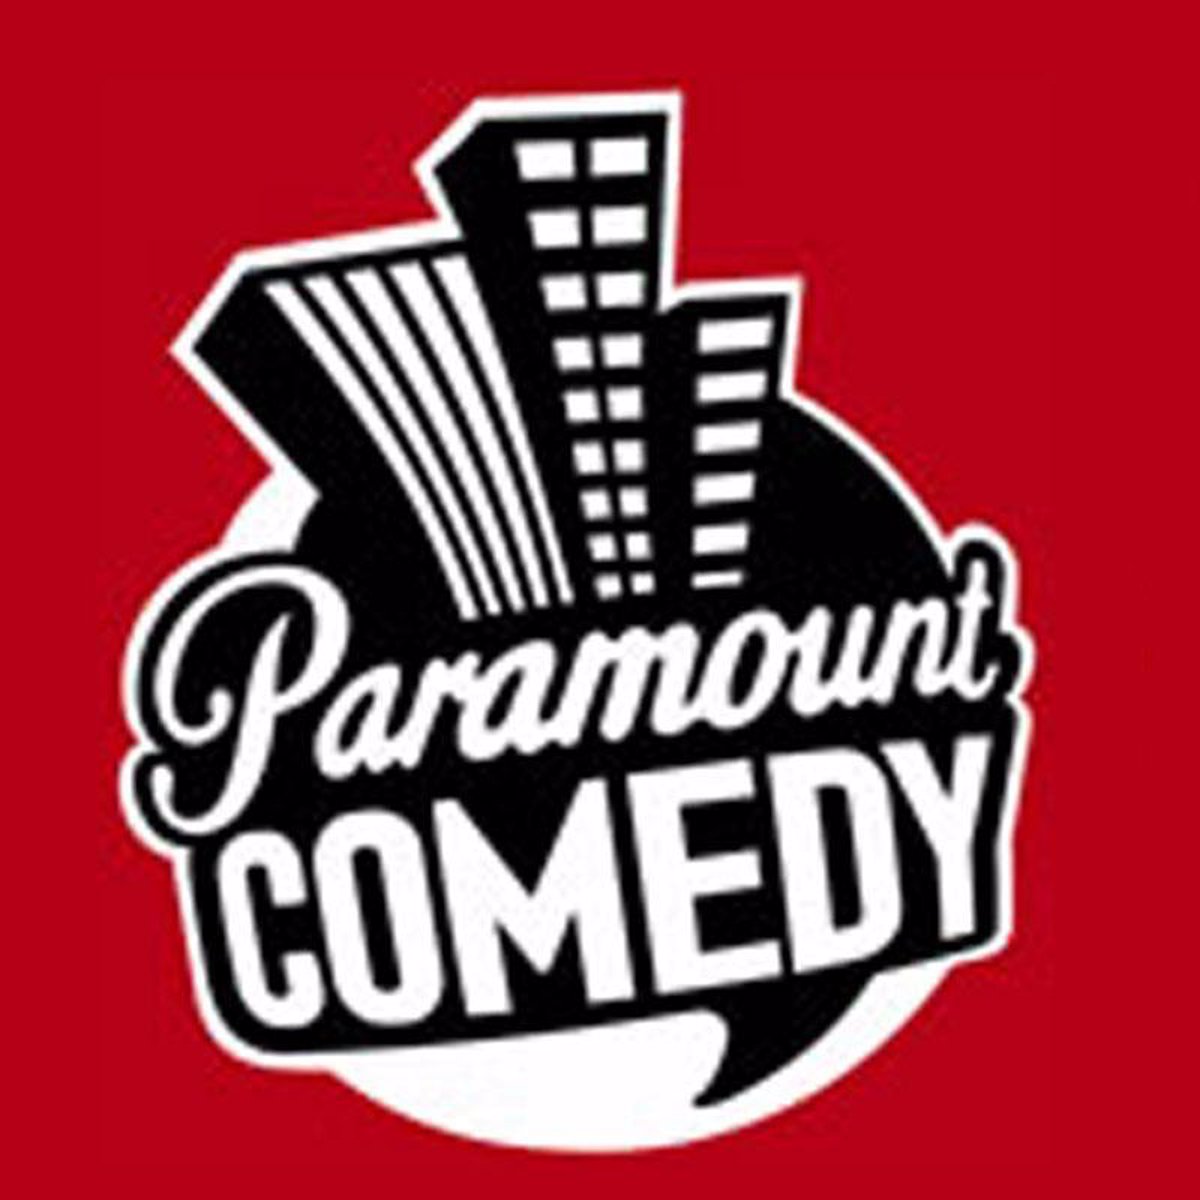 Парамаунт камеди. Телеканал Paramount comedy. Paramount comedy заставки. Paramount comedy Украина. Парамаунт камеди большой